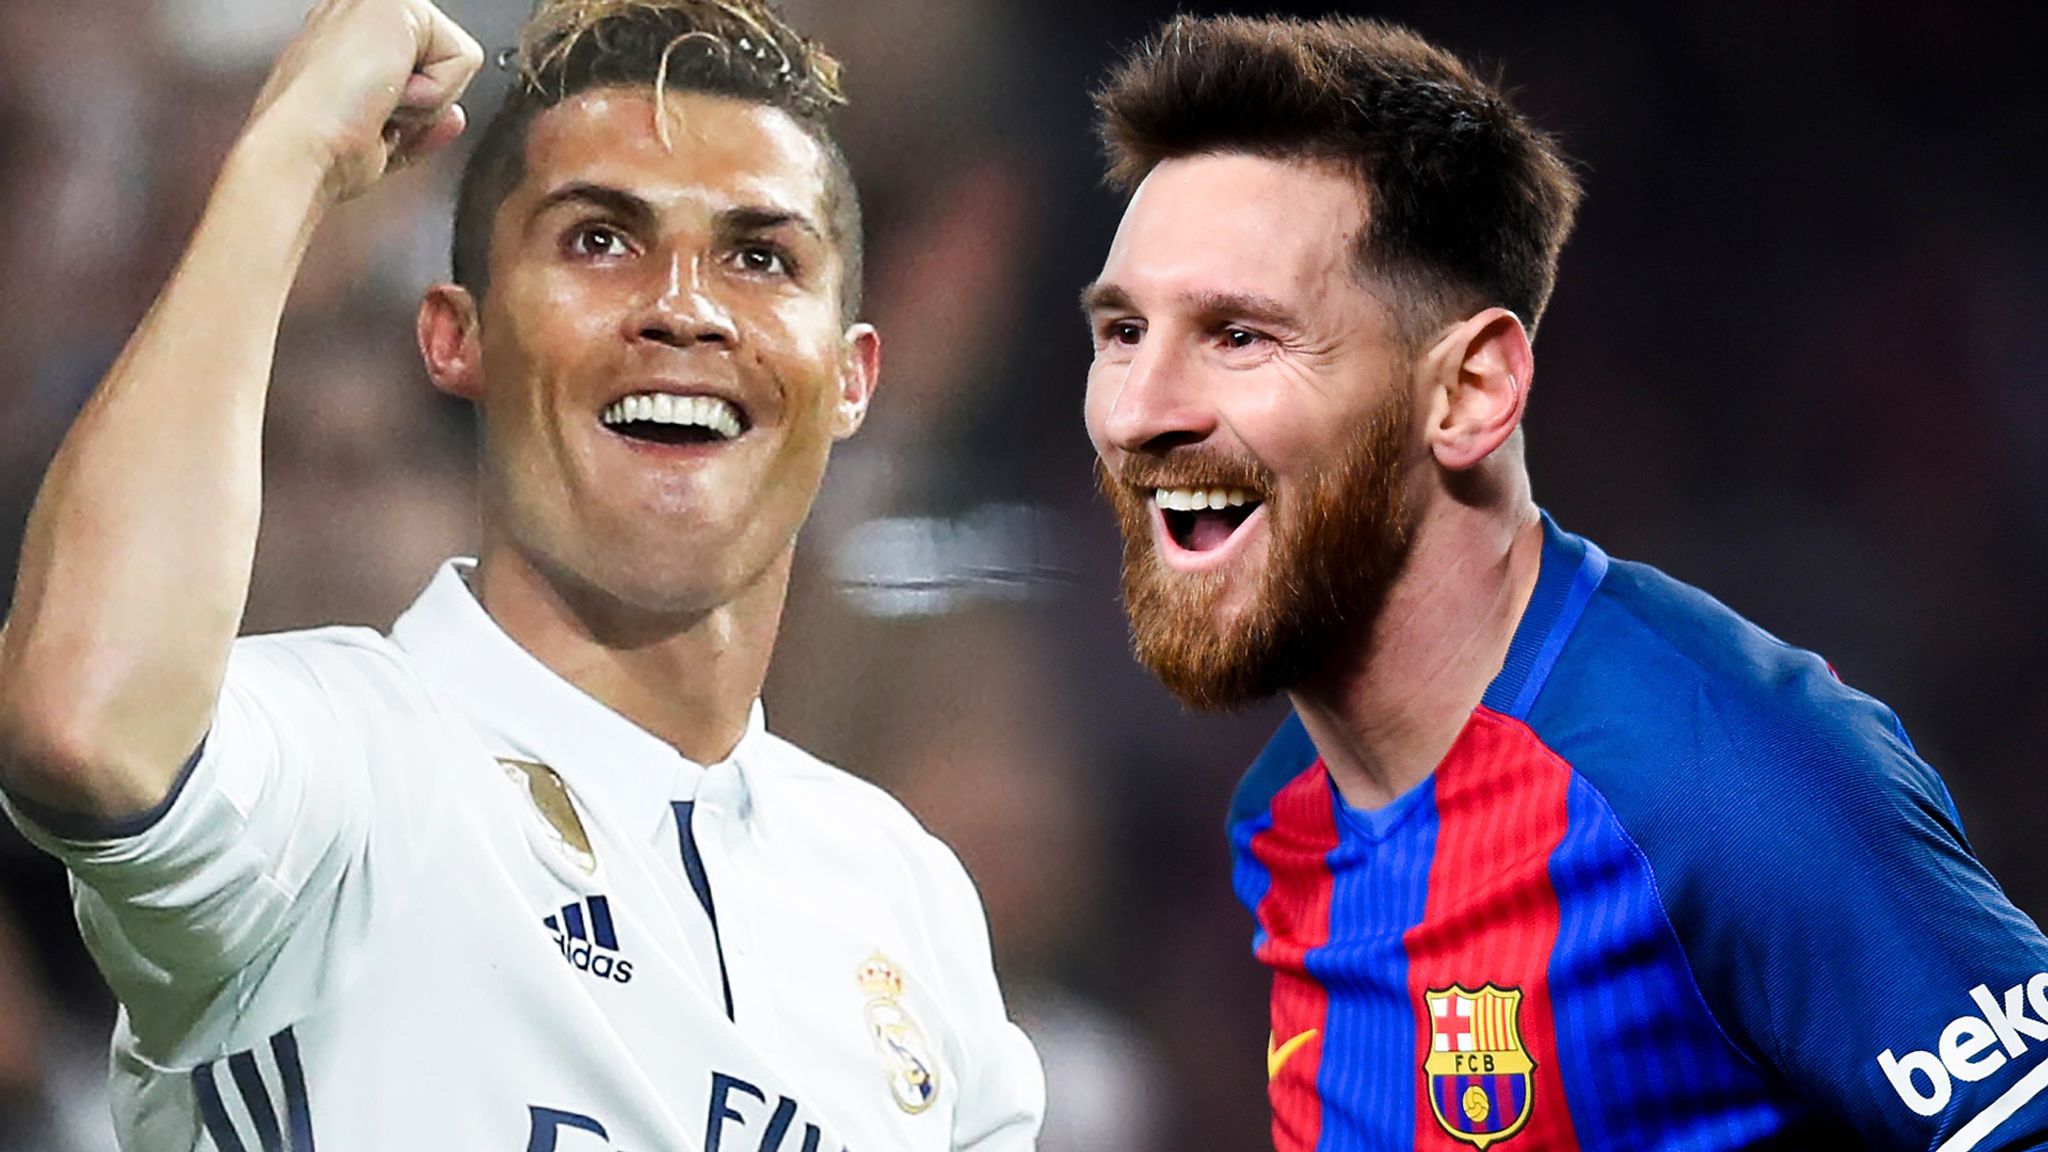 Cristiano Ronaldo v Lionel Messi: Awards, goals and stats compared